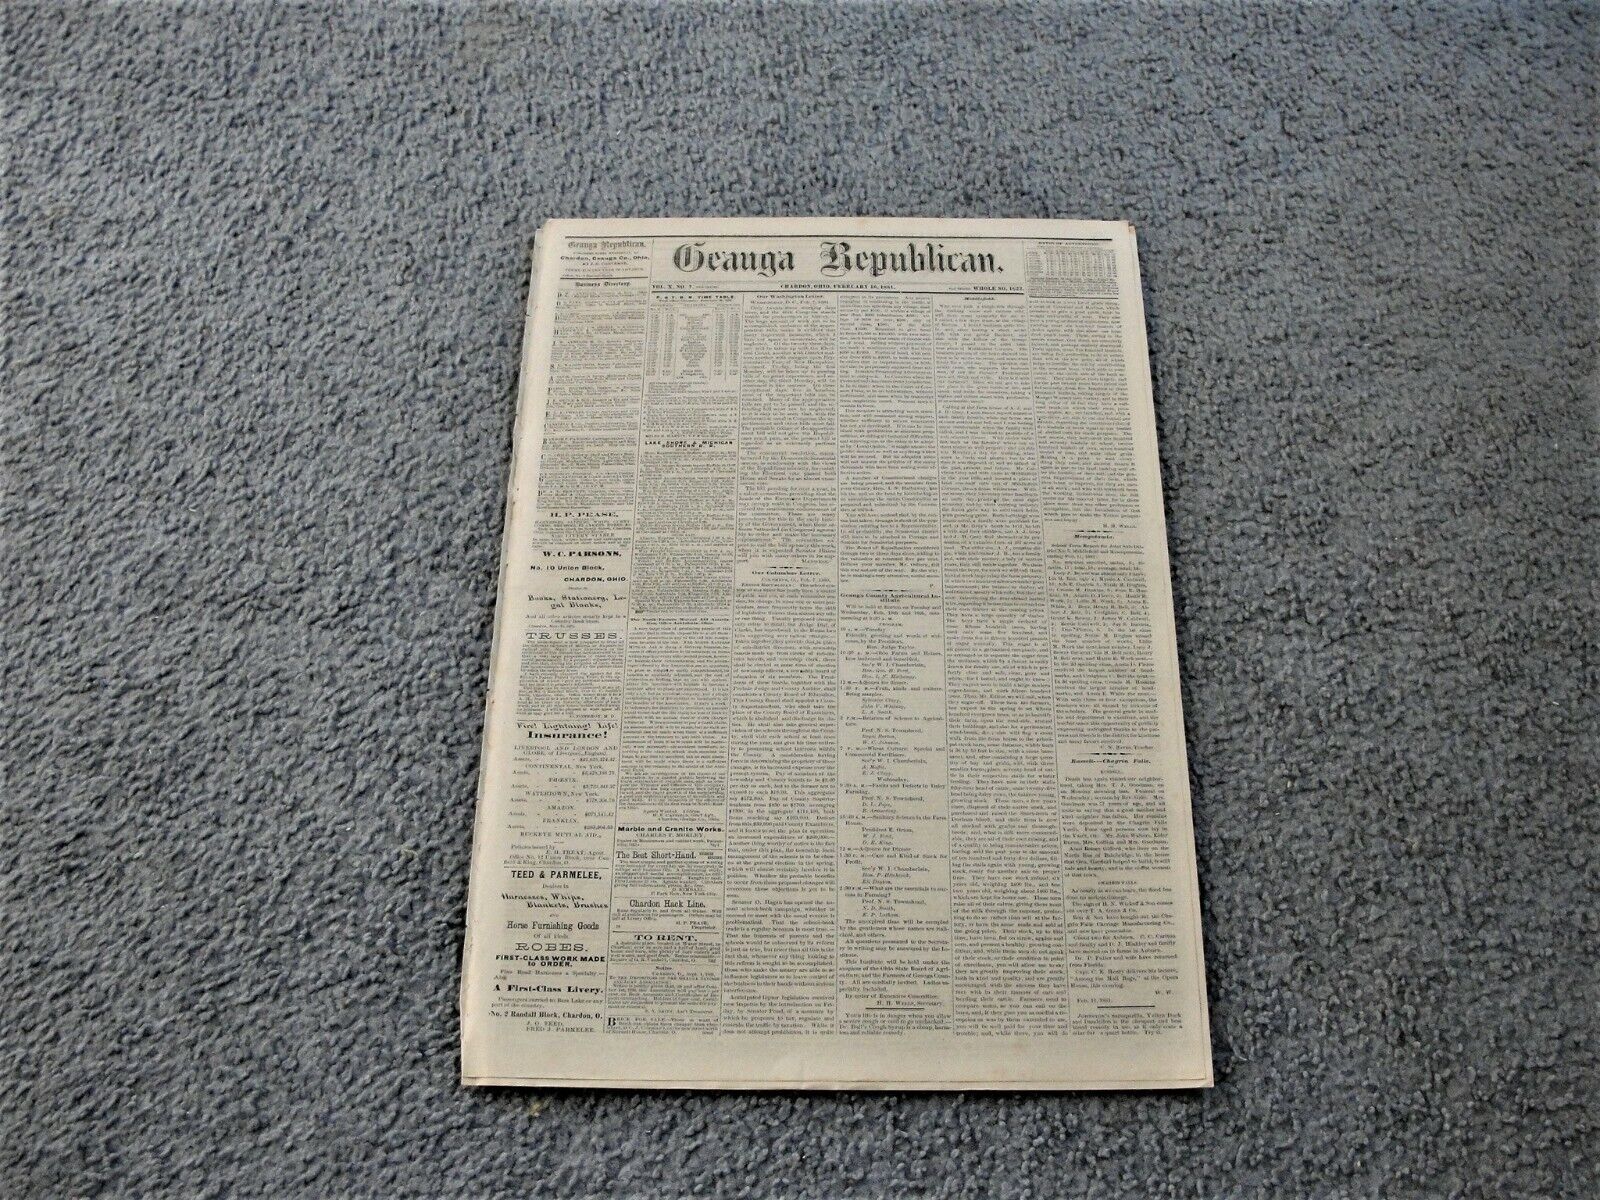 Geauga Republican, Wednesday, February 16, 1881- Chardon, Ohio Newspaper. 